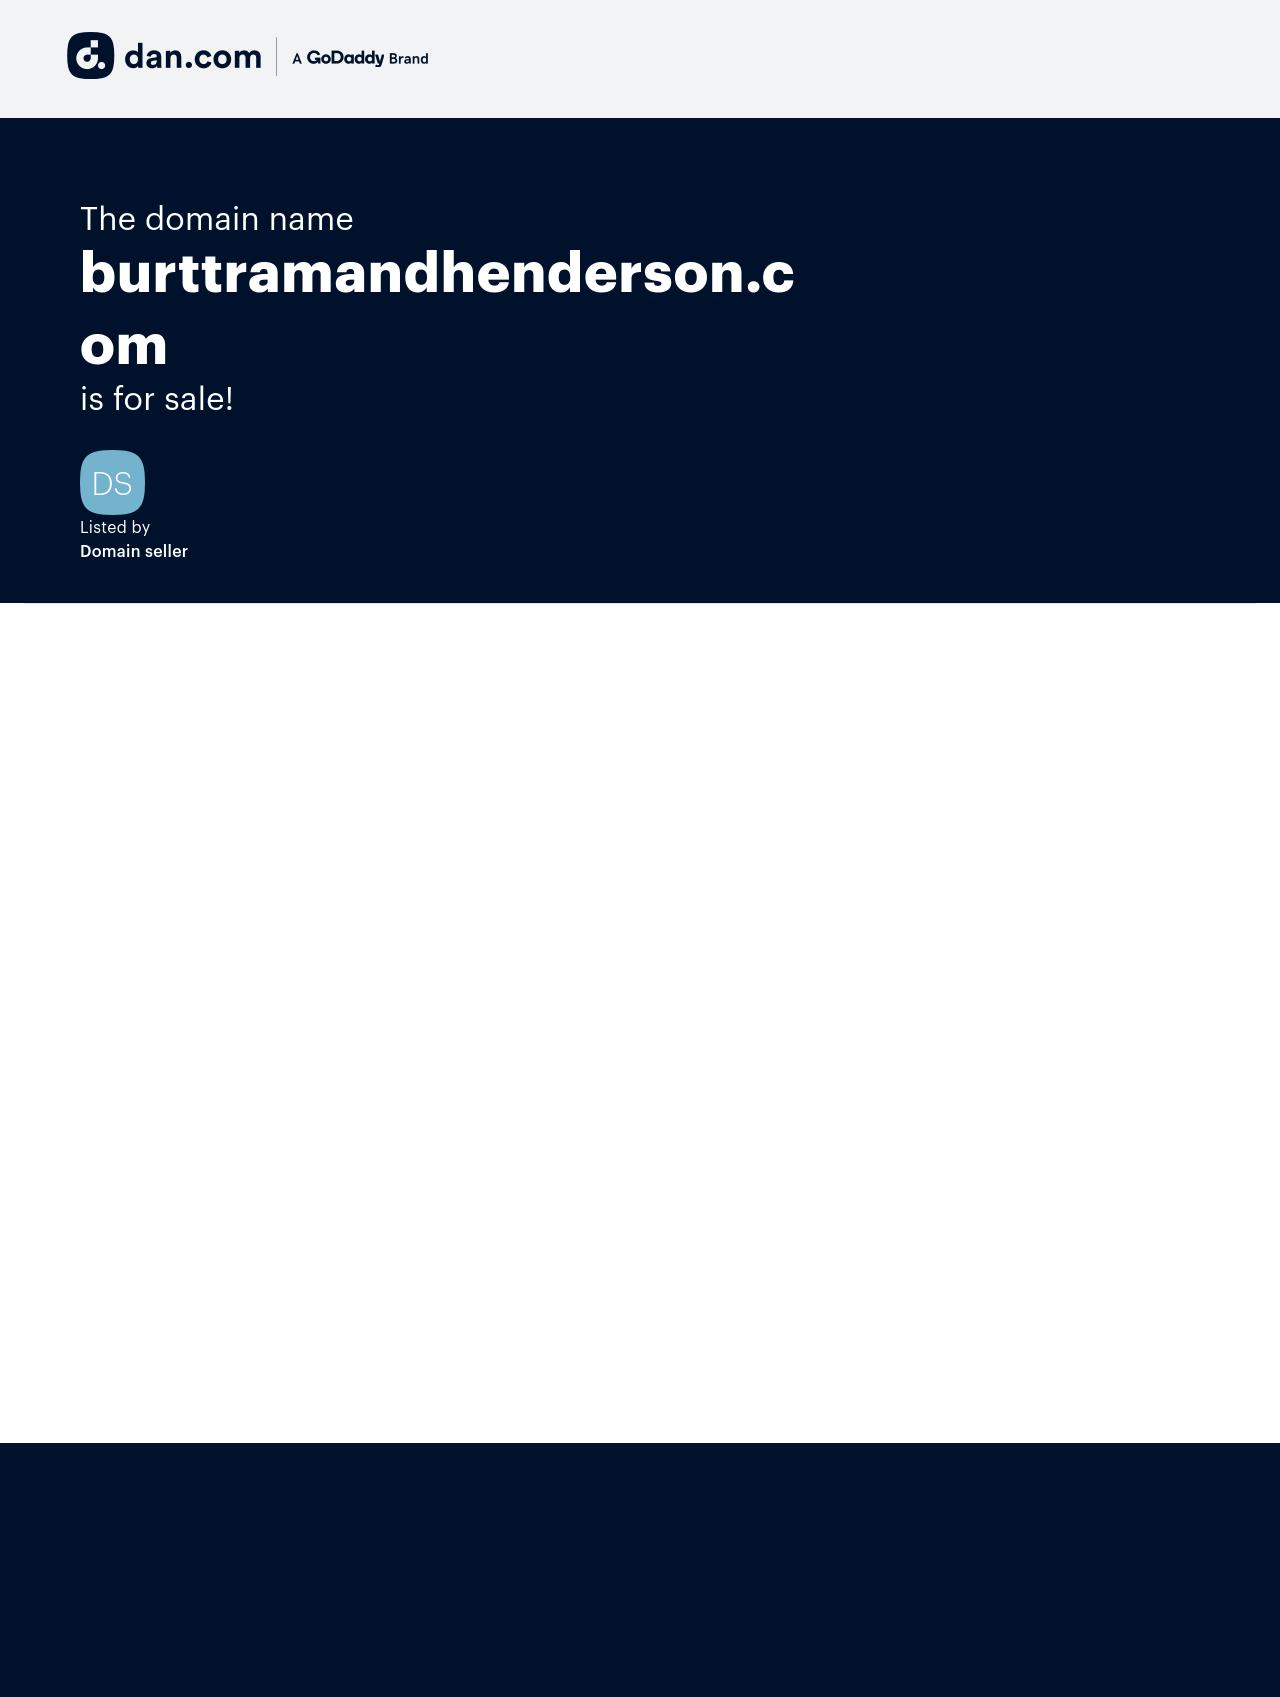 Burttram & Henderson - Birmingham AL Lawyers